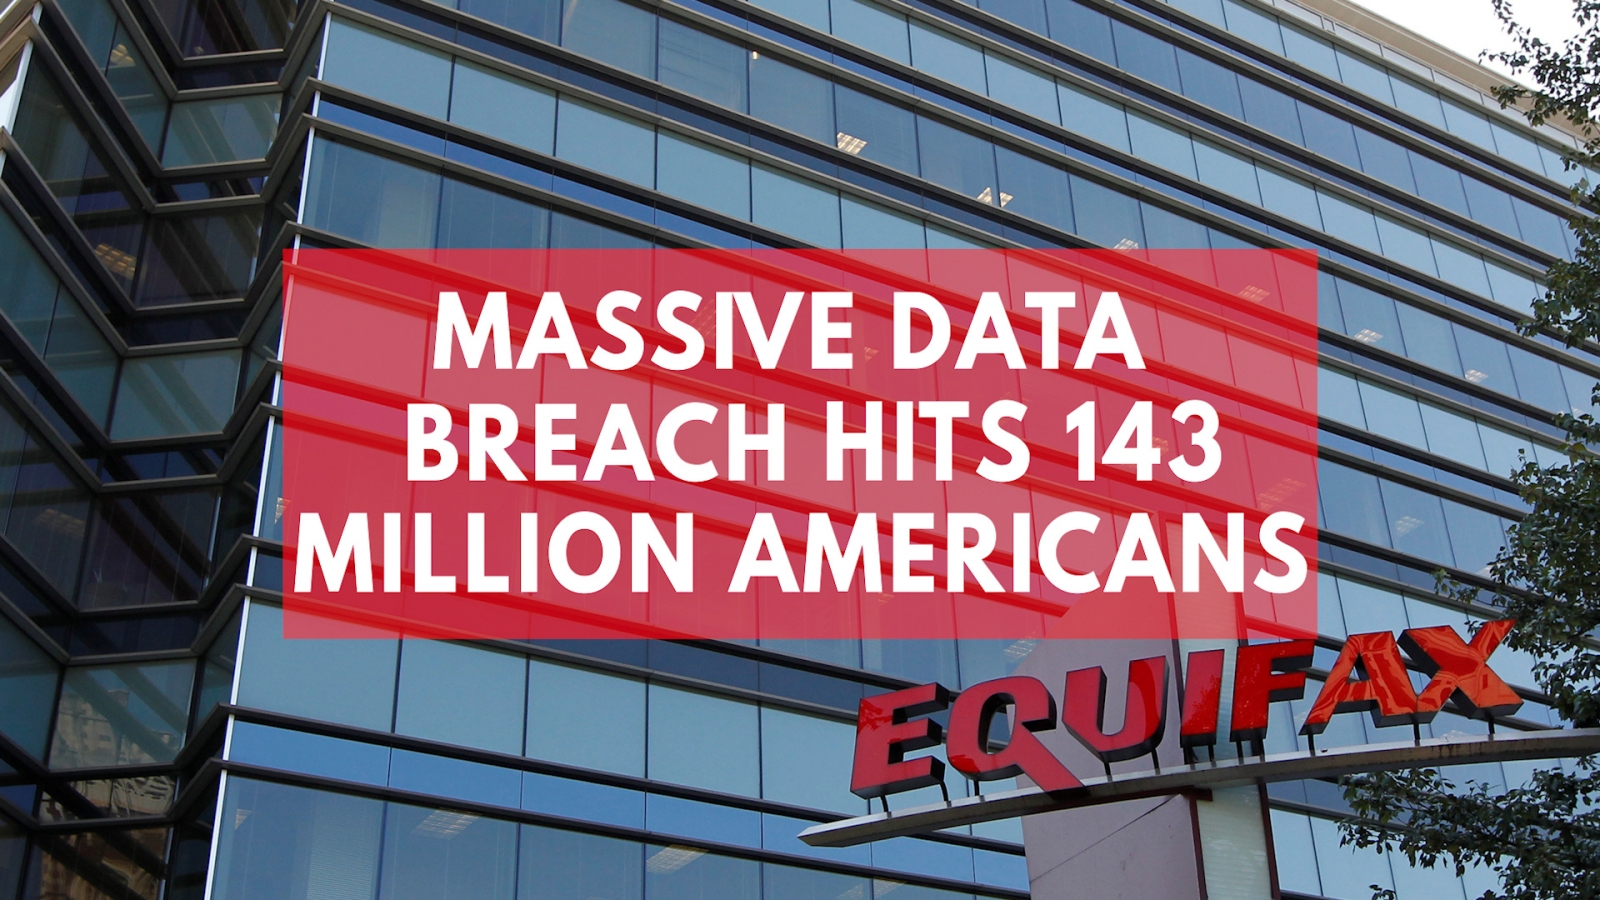 equifax data breach lookup